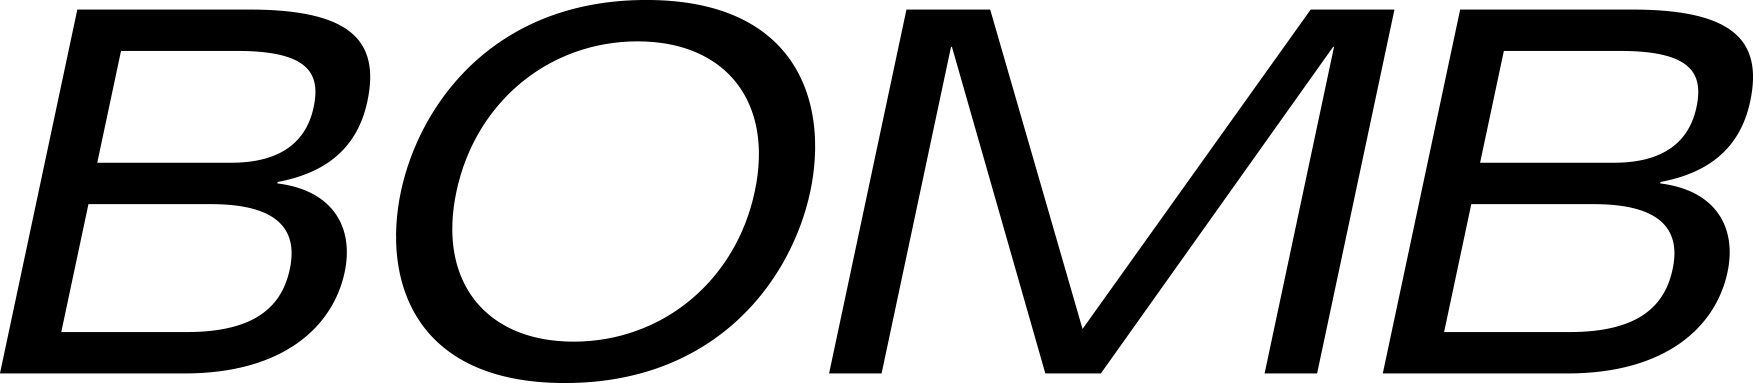 BOMB Magazine logo